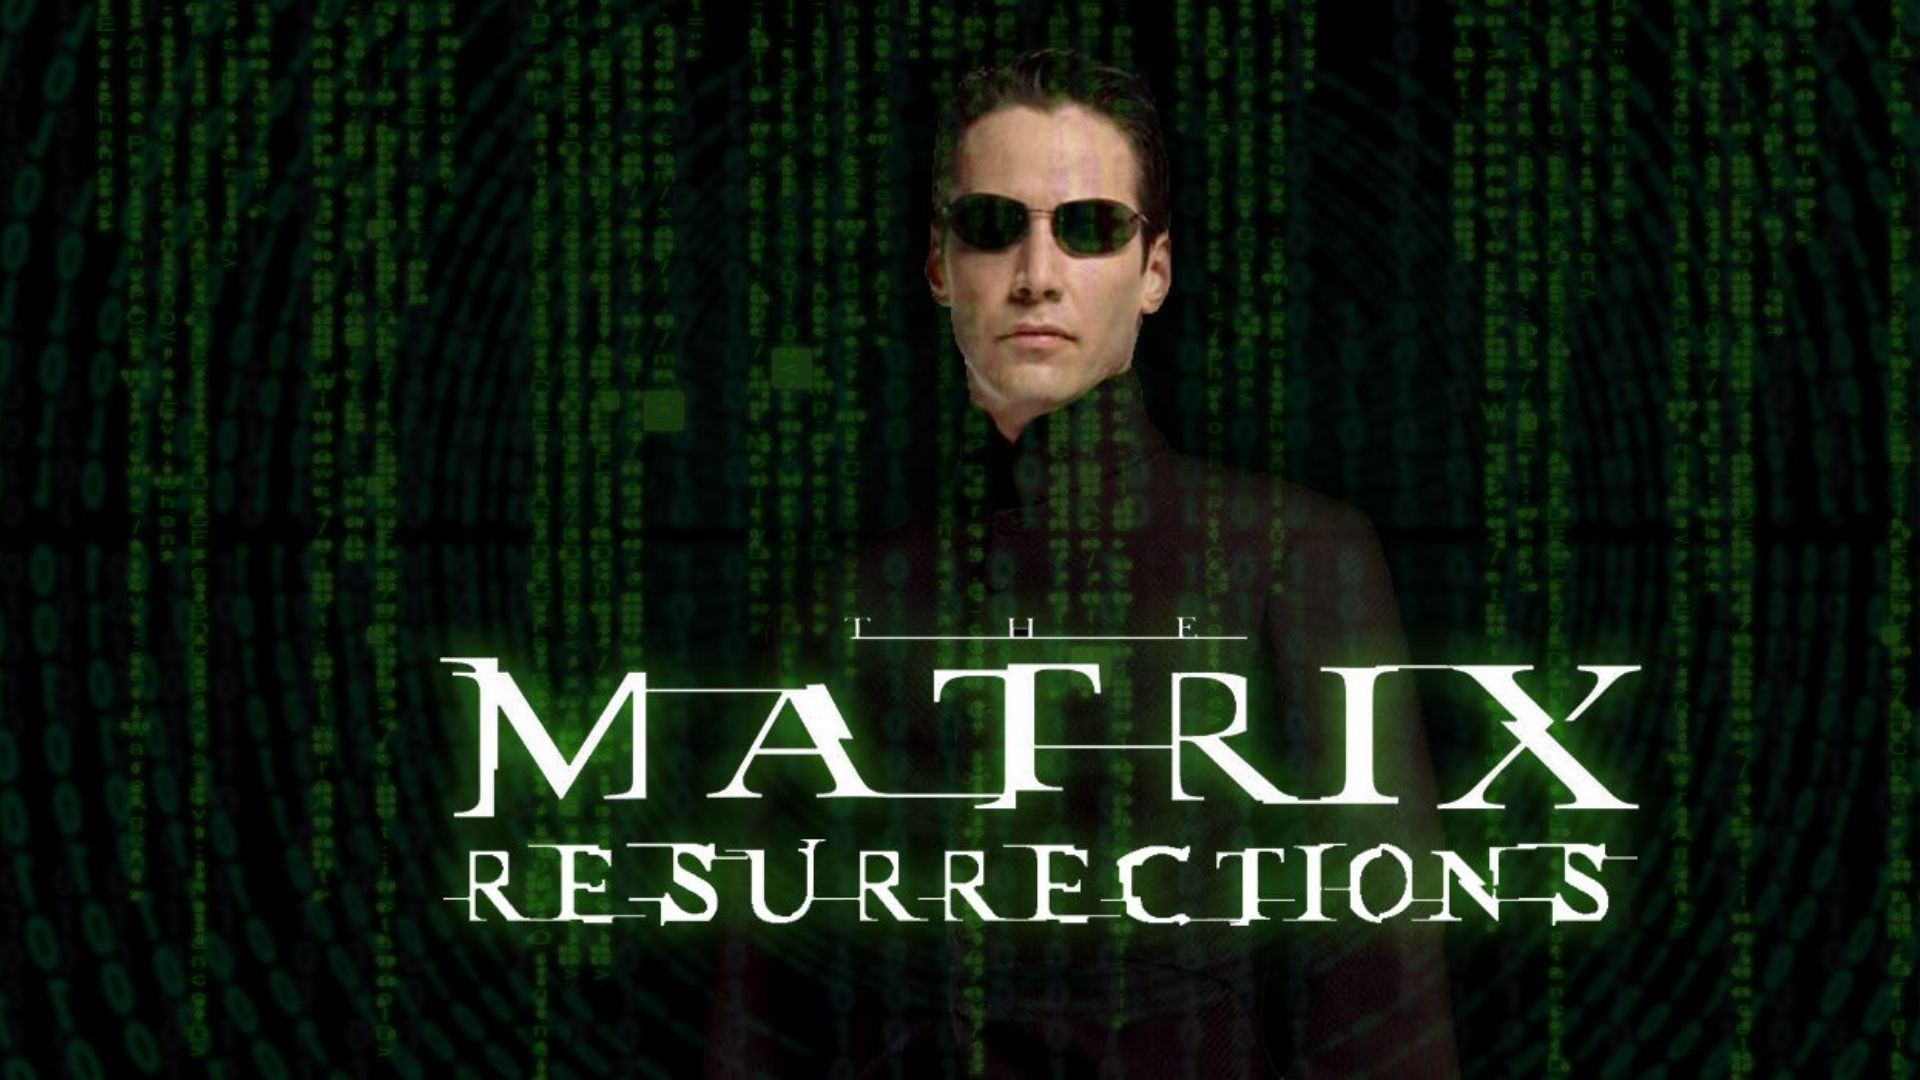 The Matrix 4 Wallpaper The Matrix 4 Background, Photo & Image